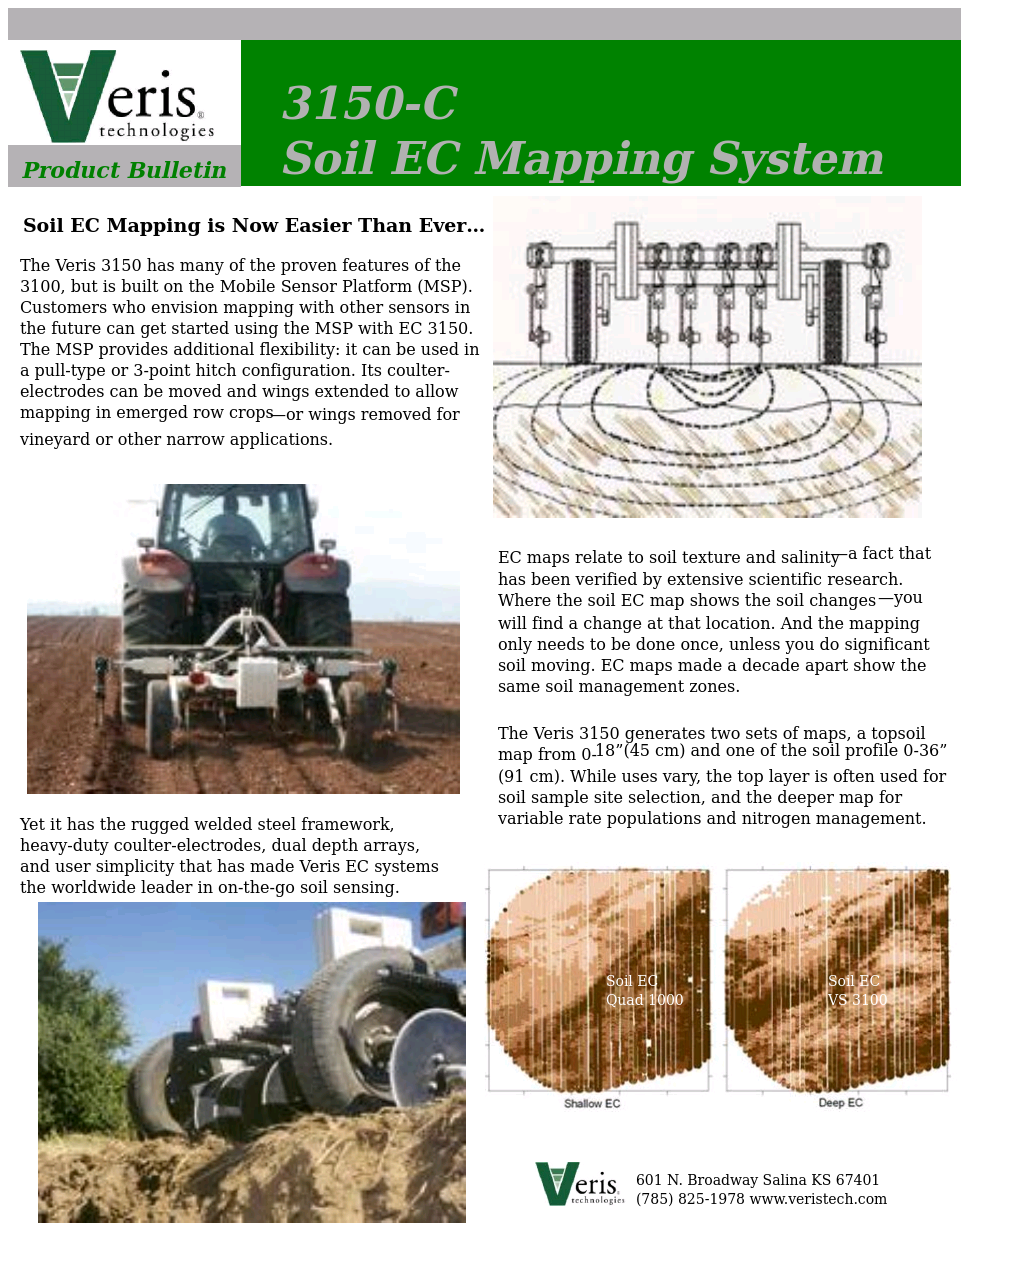 3150-C Soil EC Mapping System - Product Bulletin